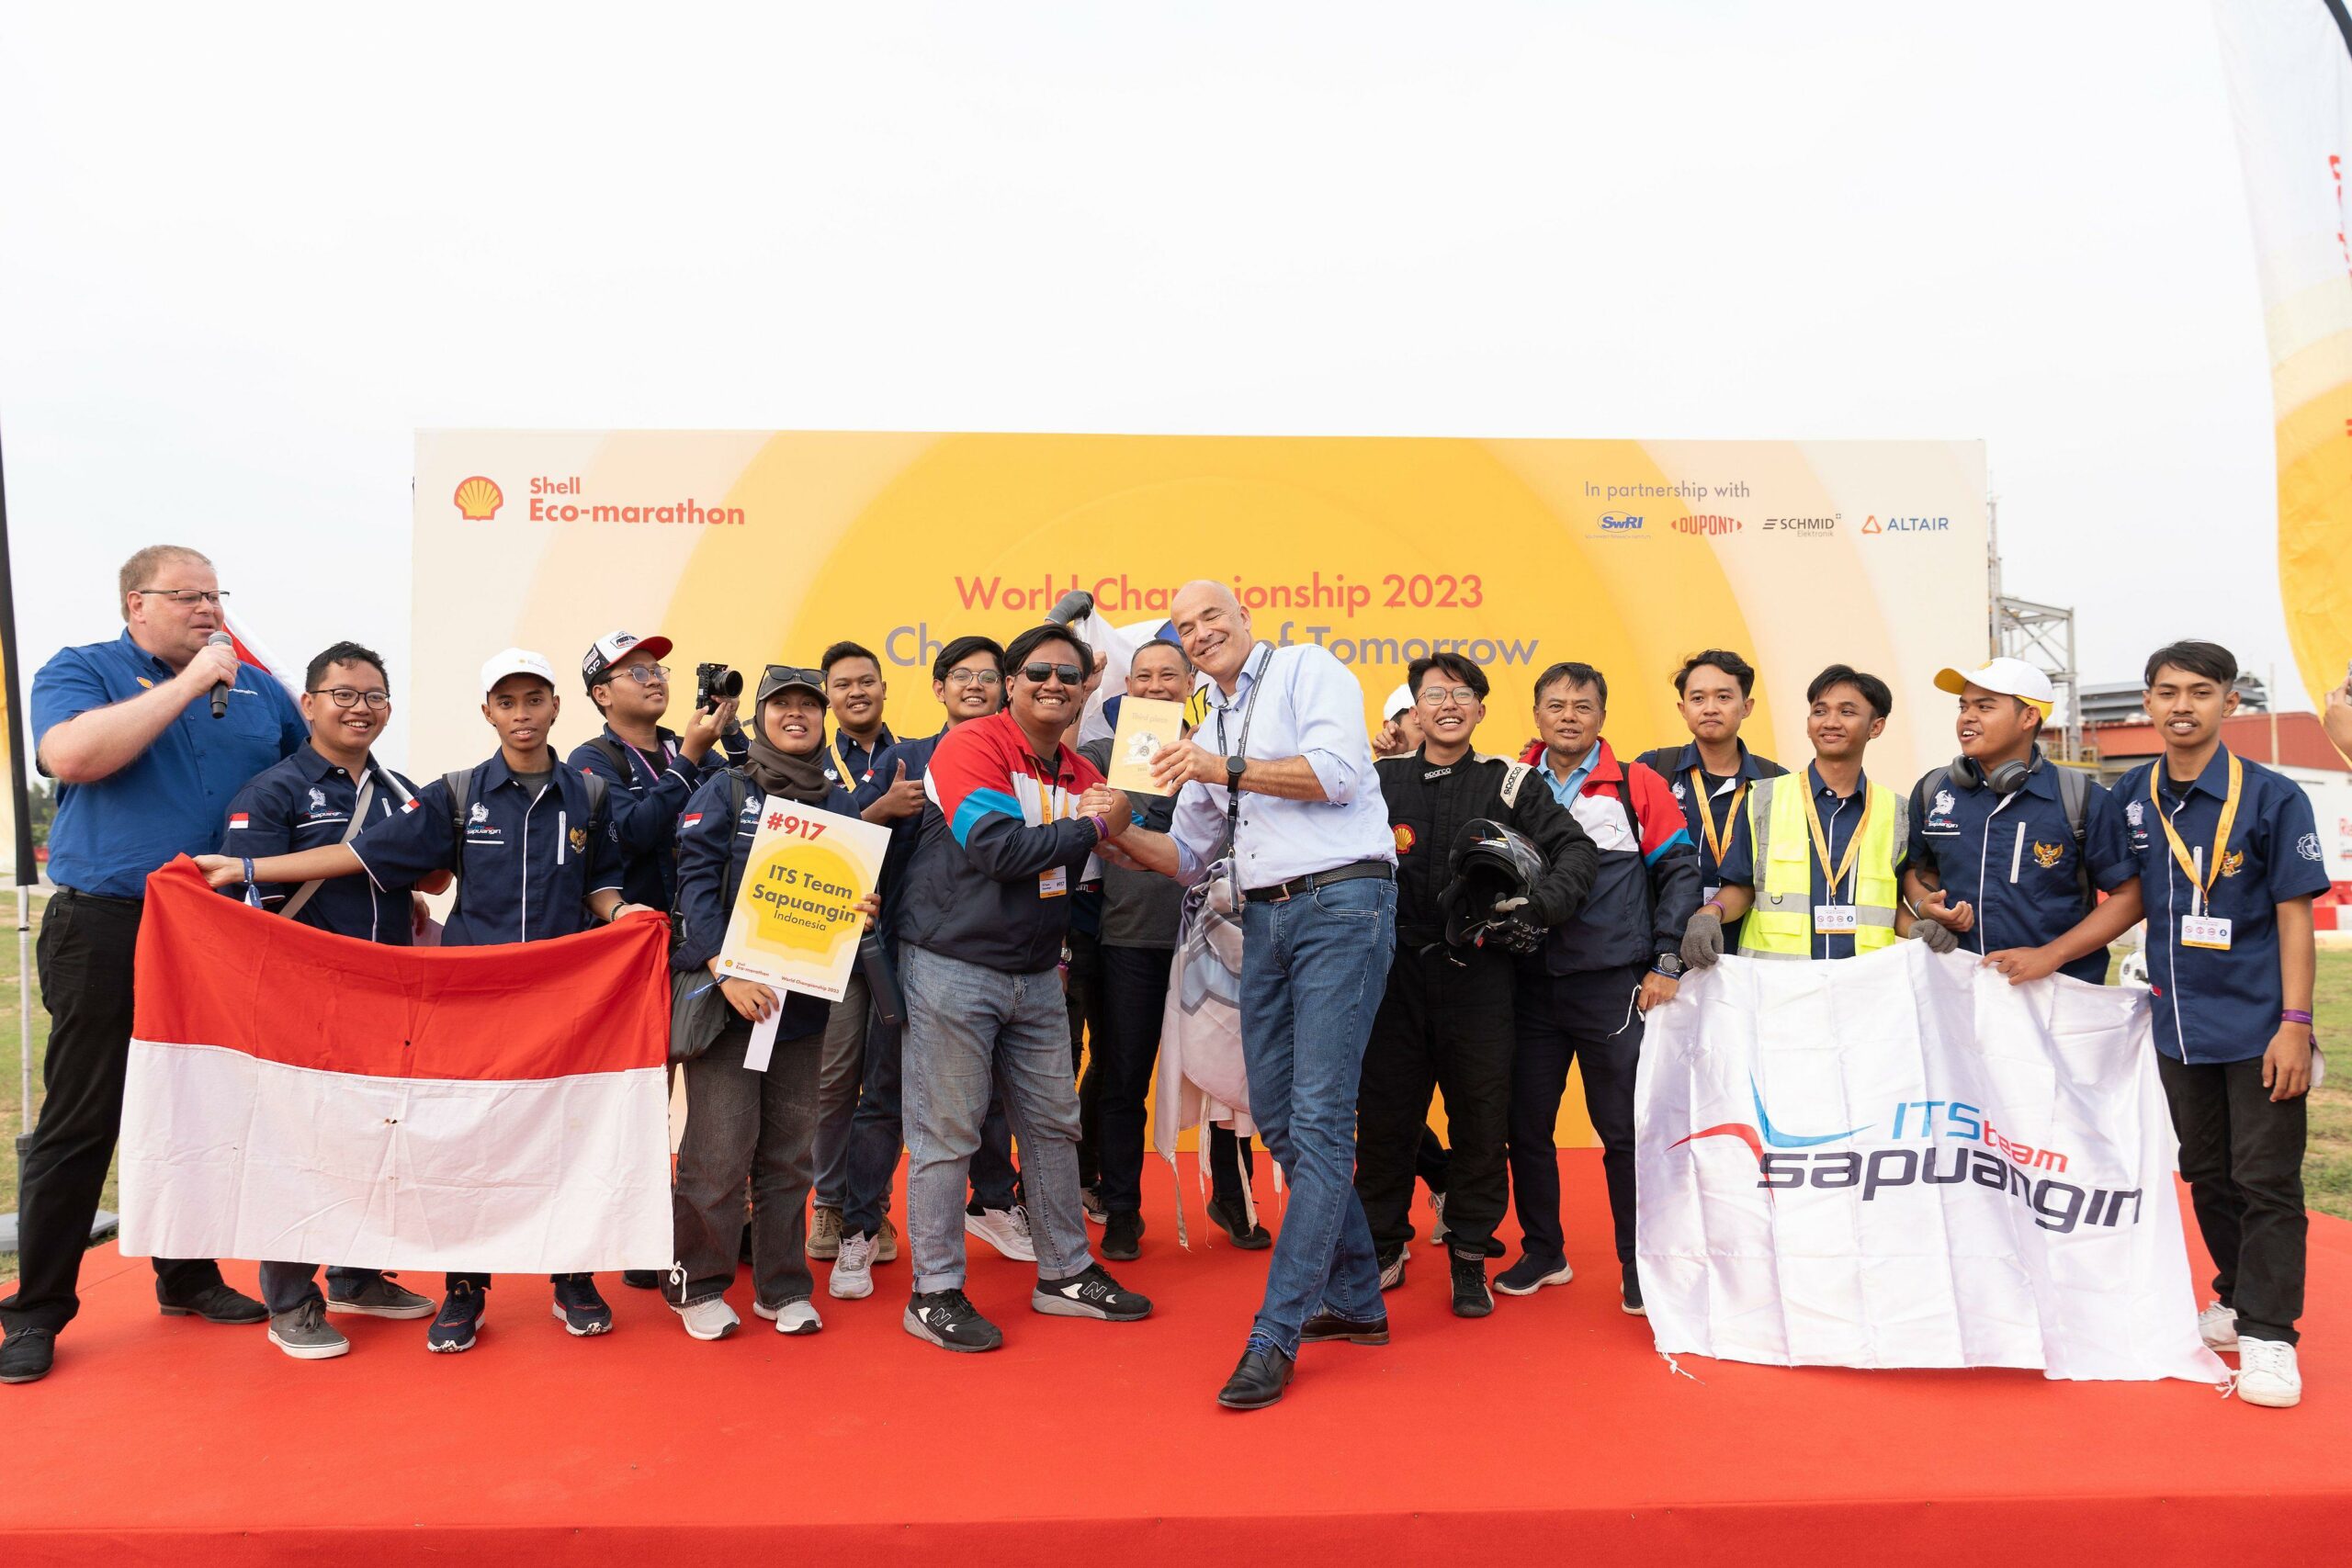 Image of the Sapuangin team receiving an award at SEM-2023